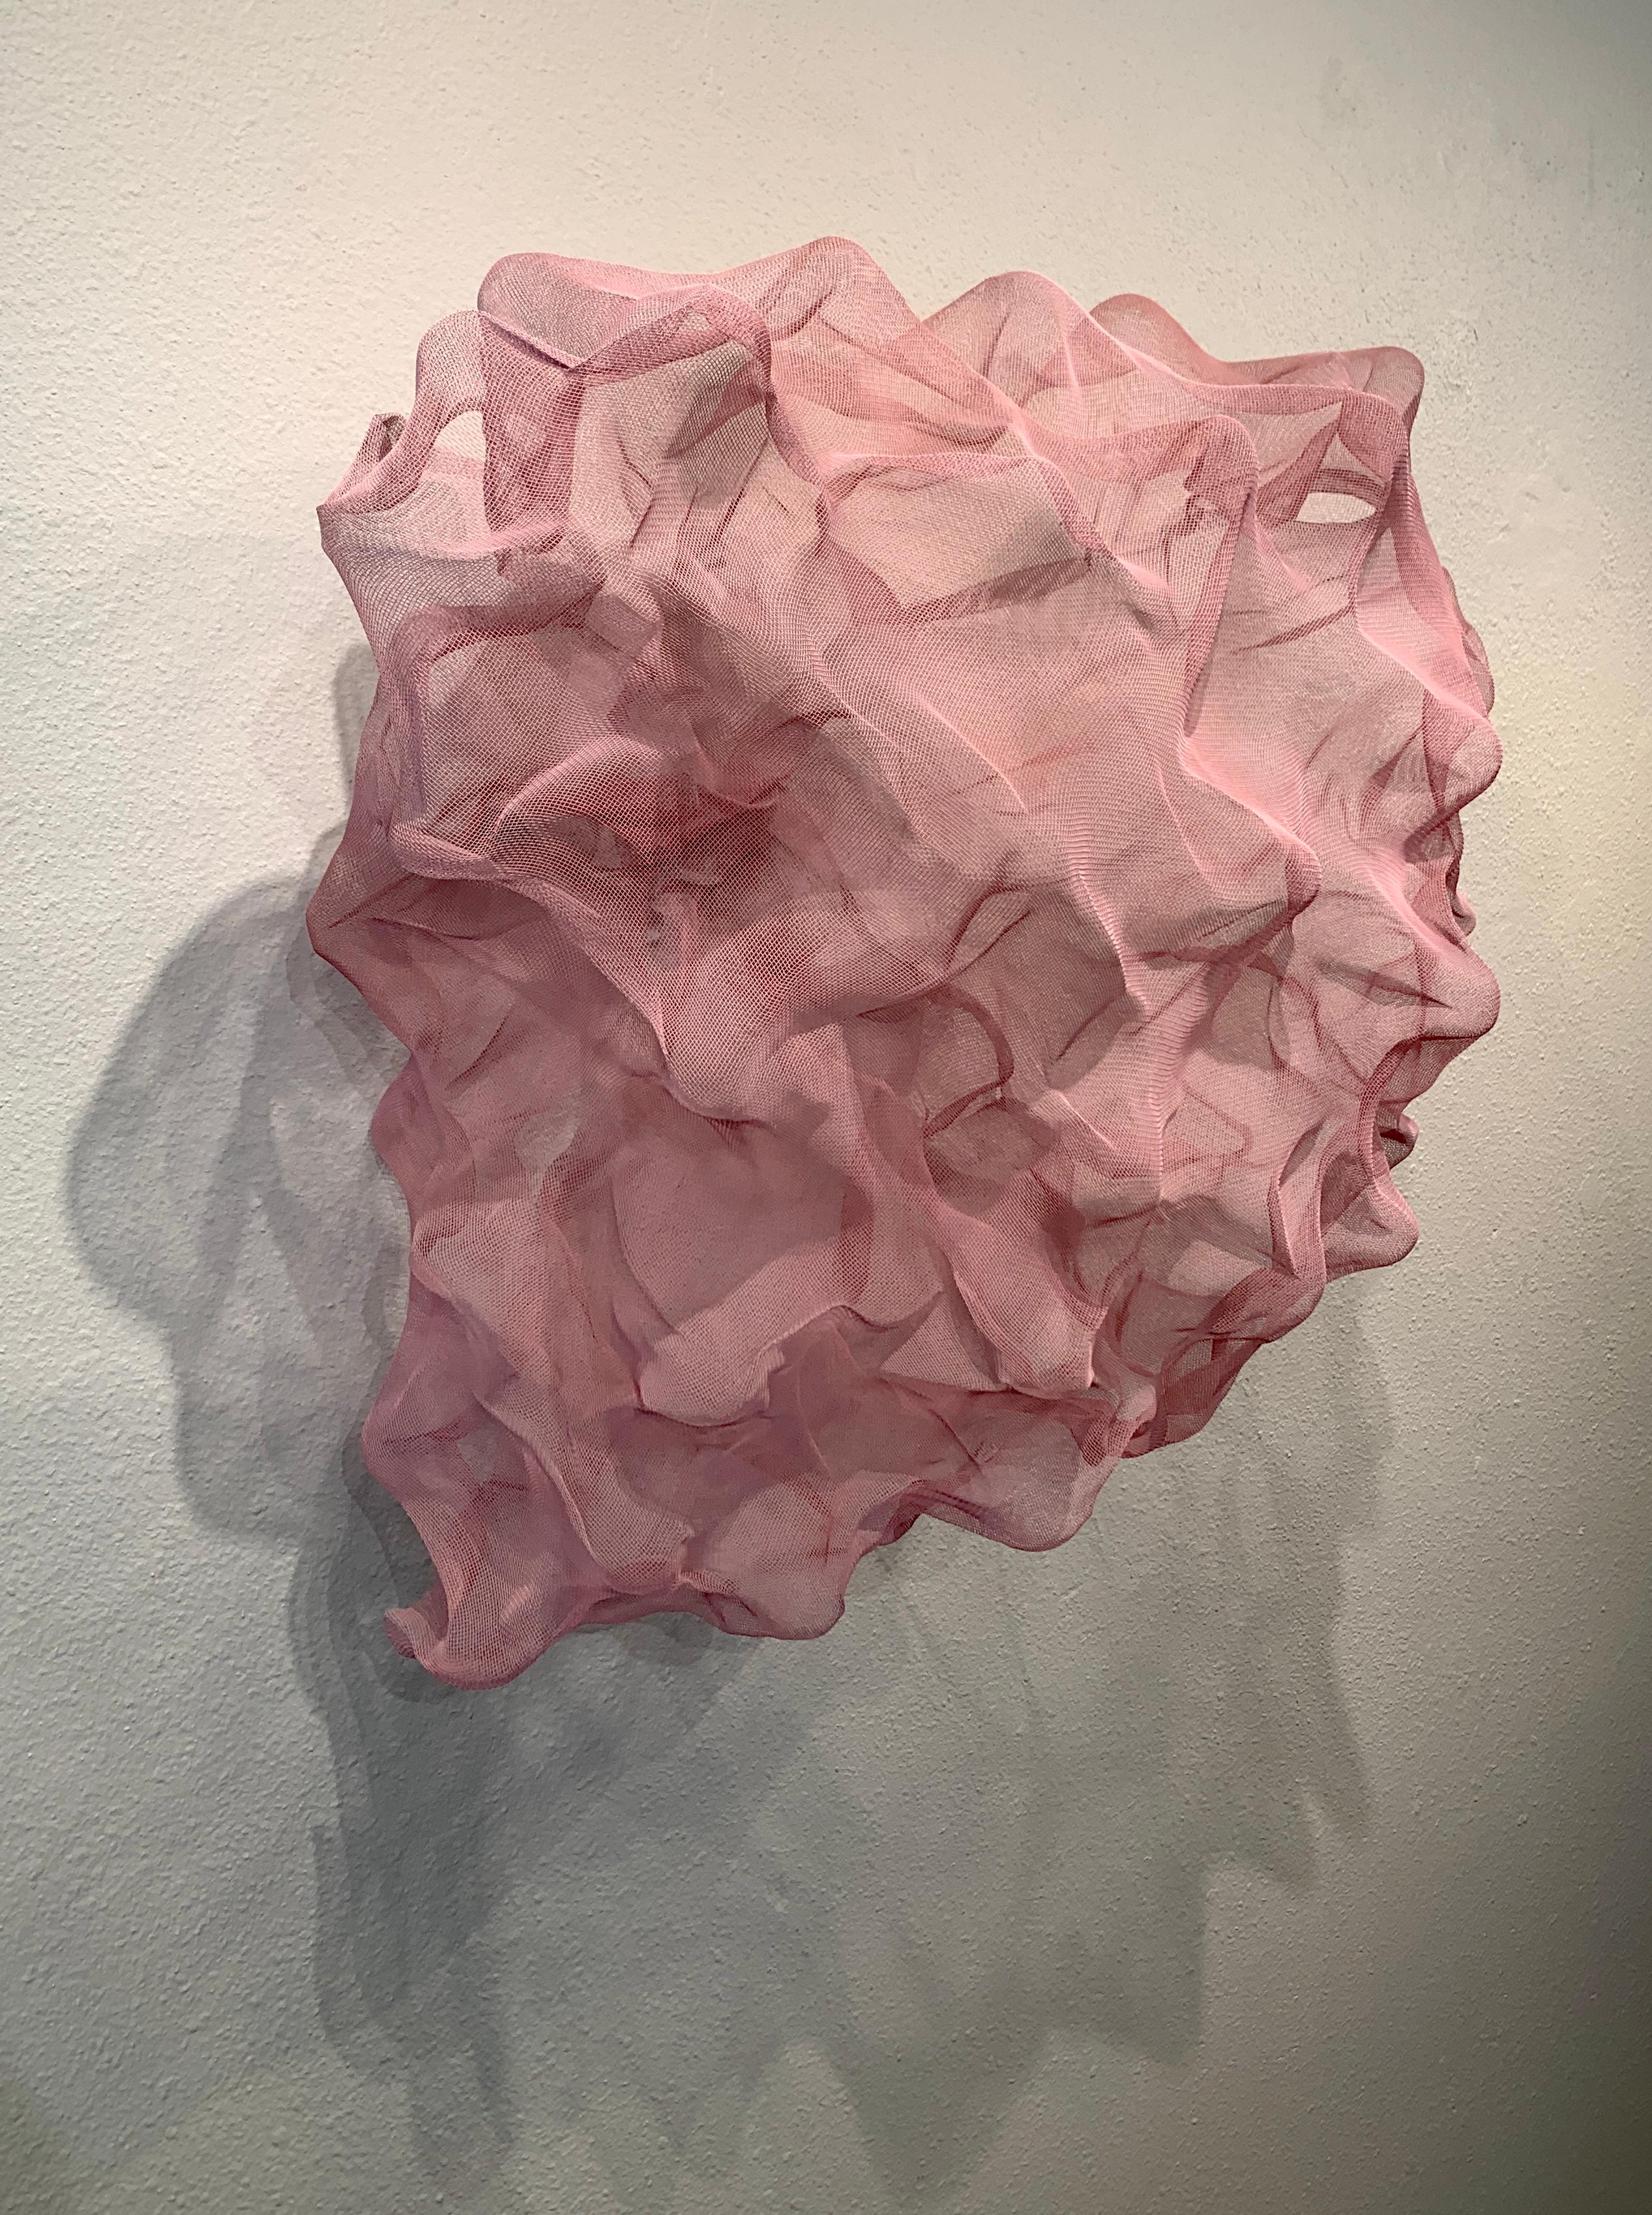 Cotton Candy Cloud, Atticus Adams Pink Metal Mesh Sculpture Screen 1